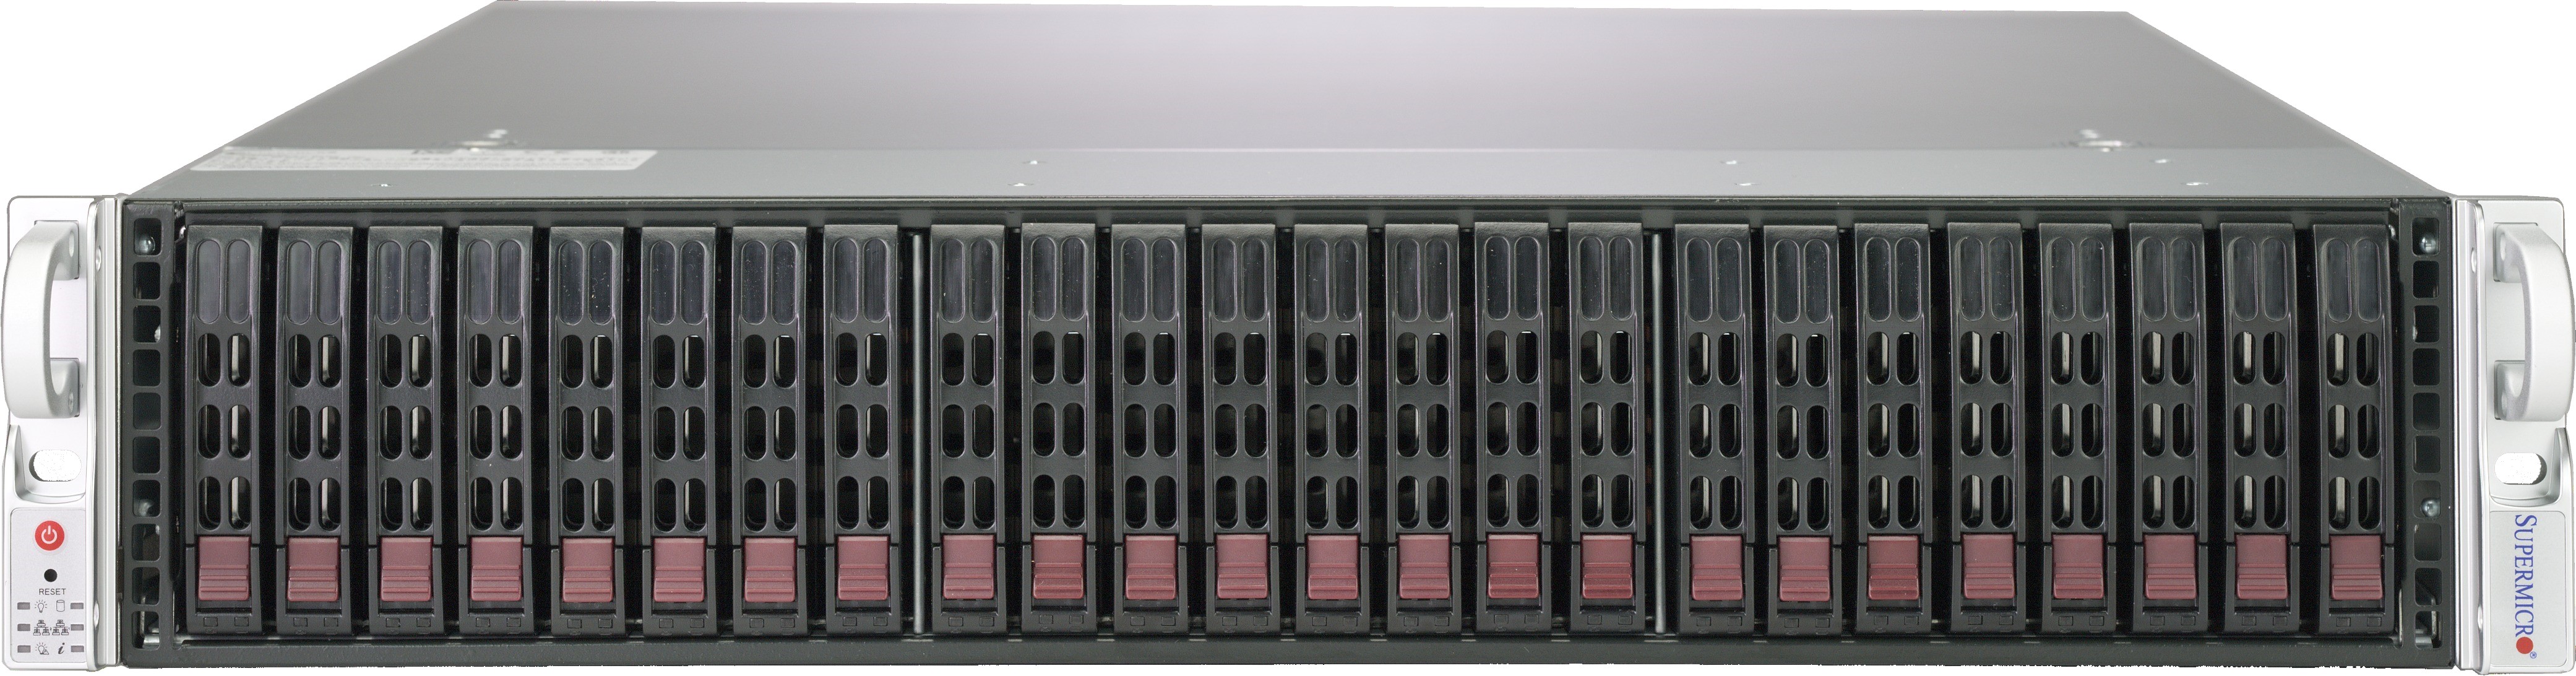 Supermicro 2U Storage Server - Performance 24 x 2.5